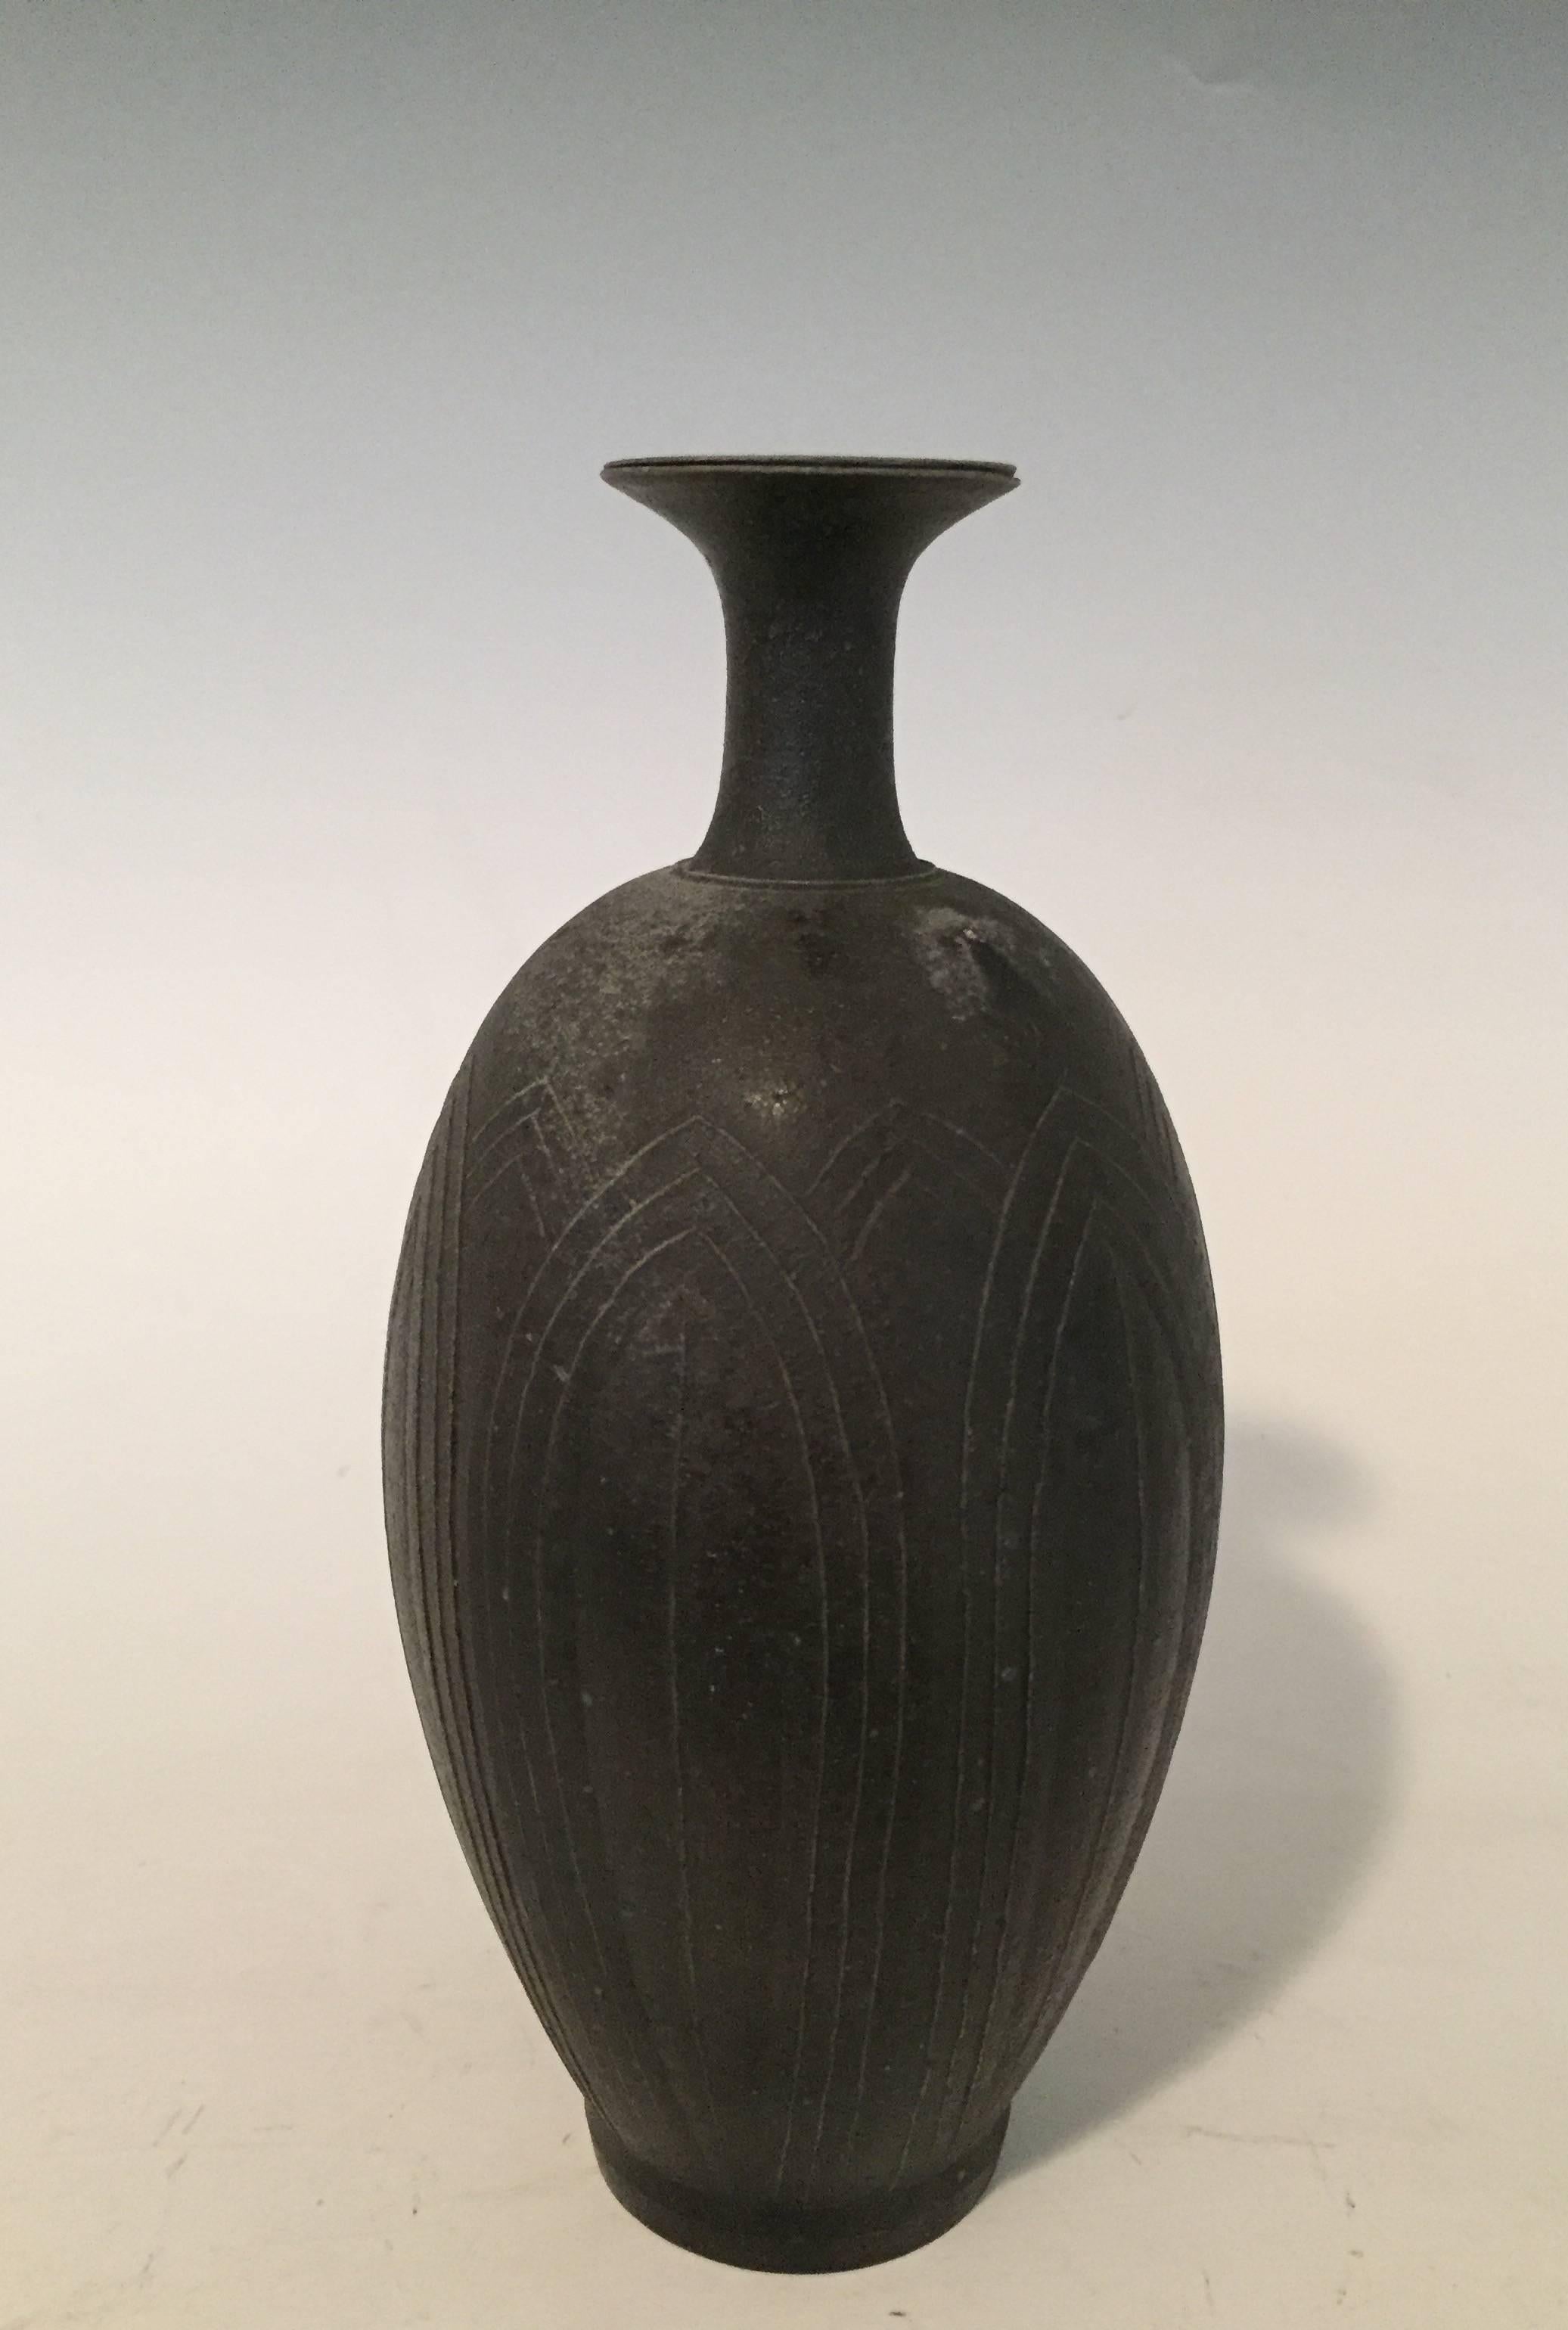 Contemporary Stoneware Vase with Lotus Design by Japanese Ceramicist Koji Toda 2